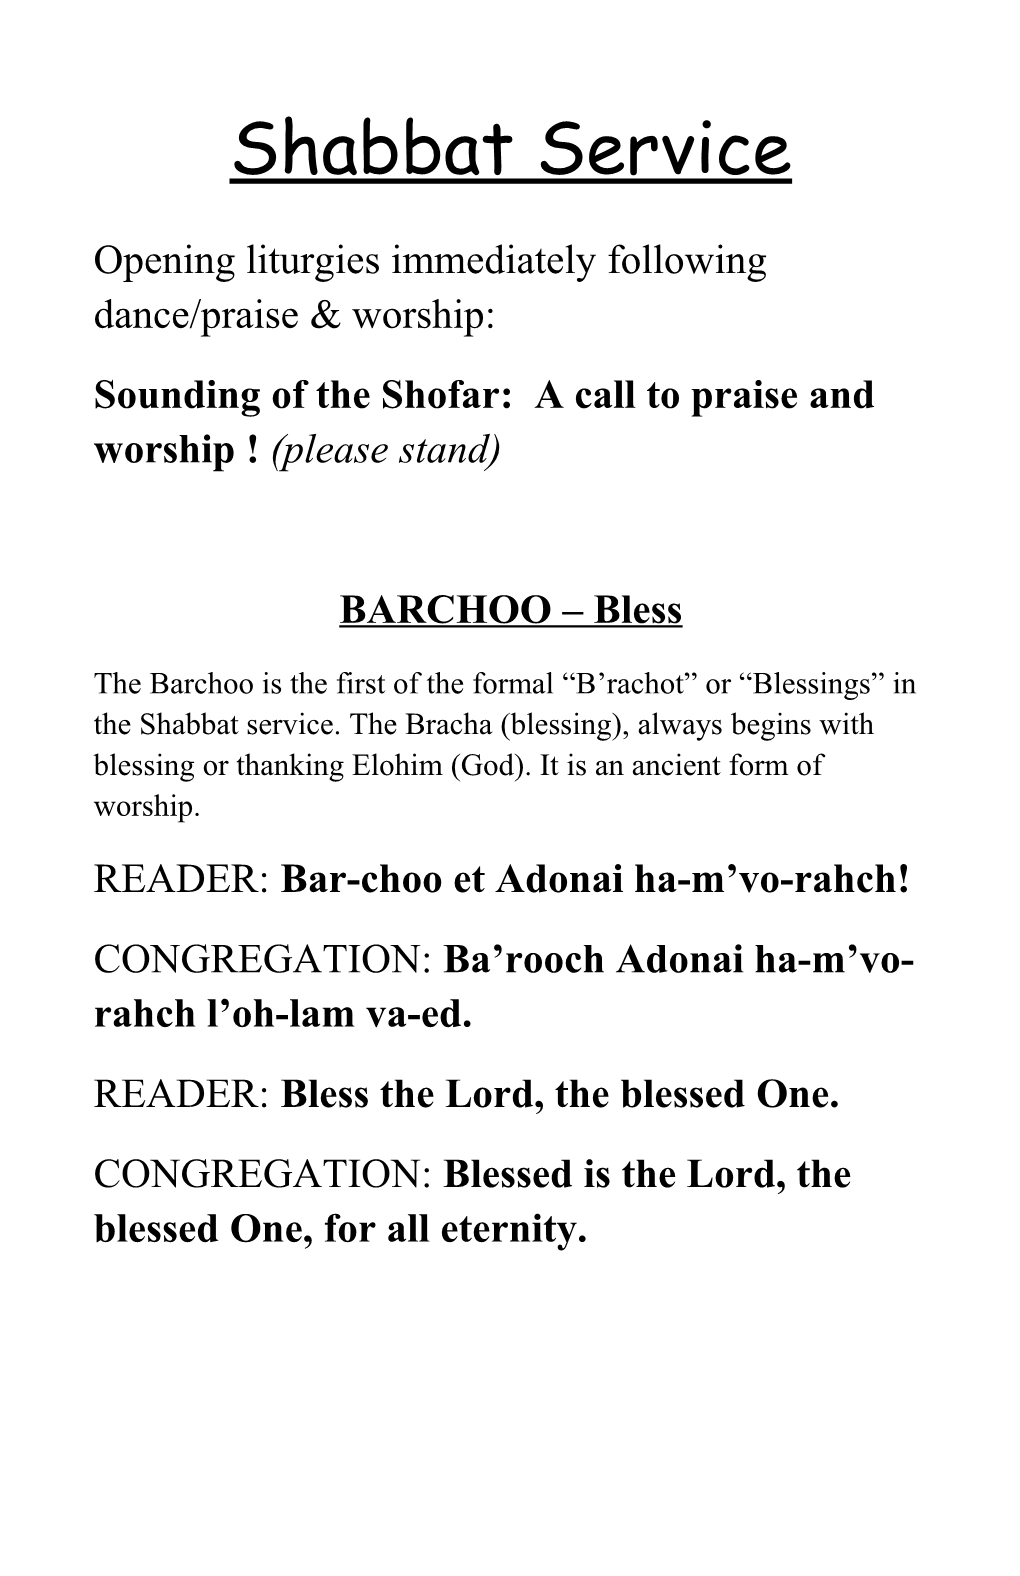 Opening Liturgies Immediately Following Dance/Praise & Worship